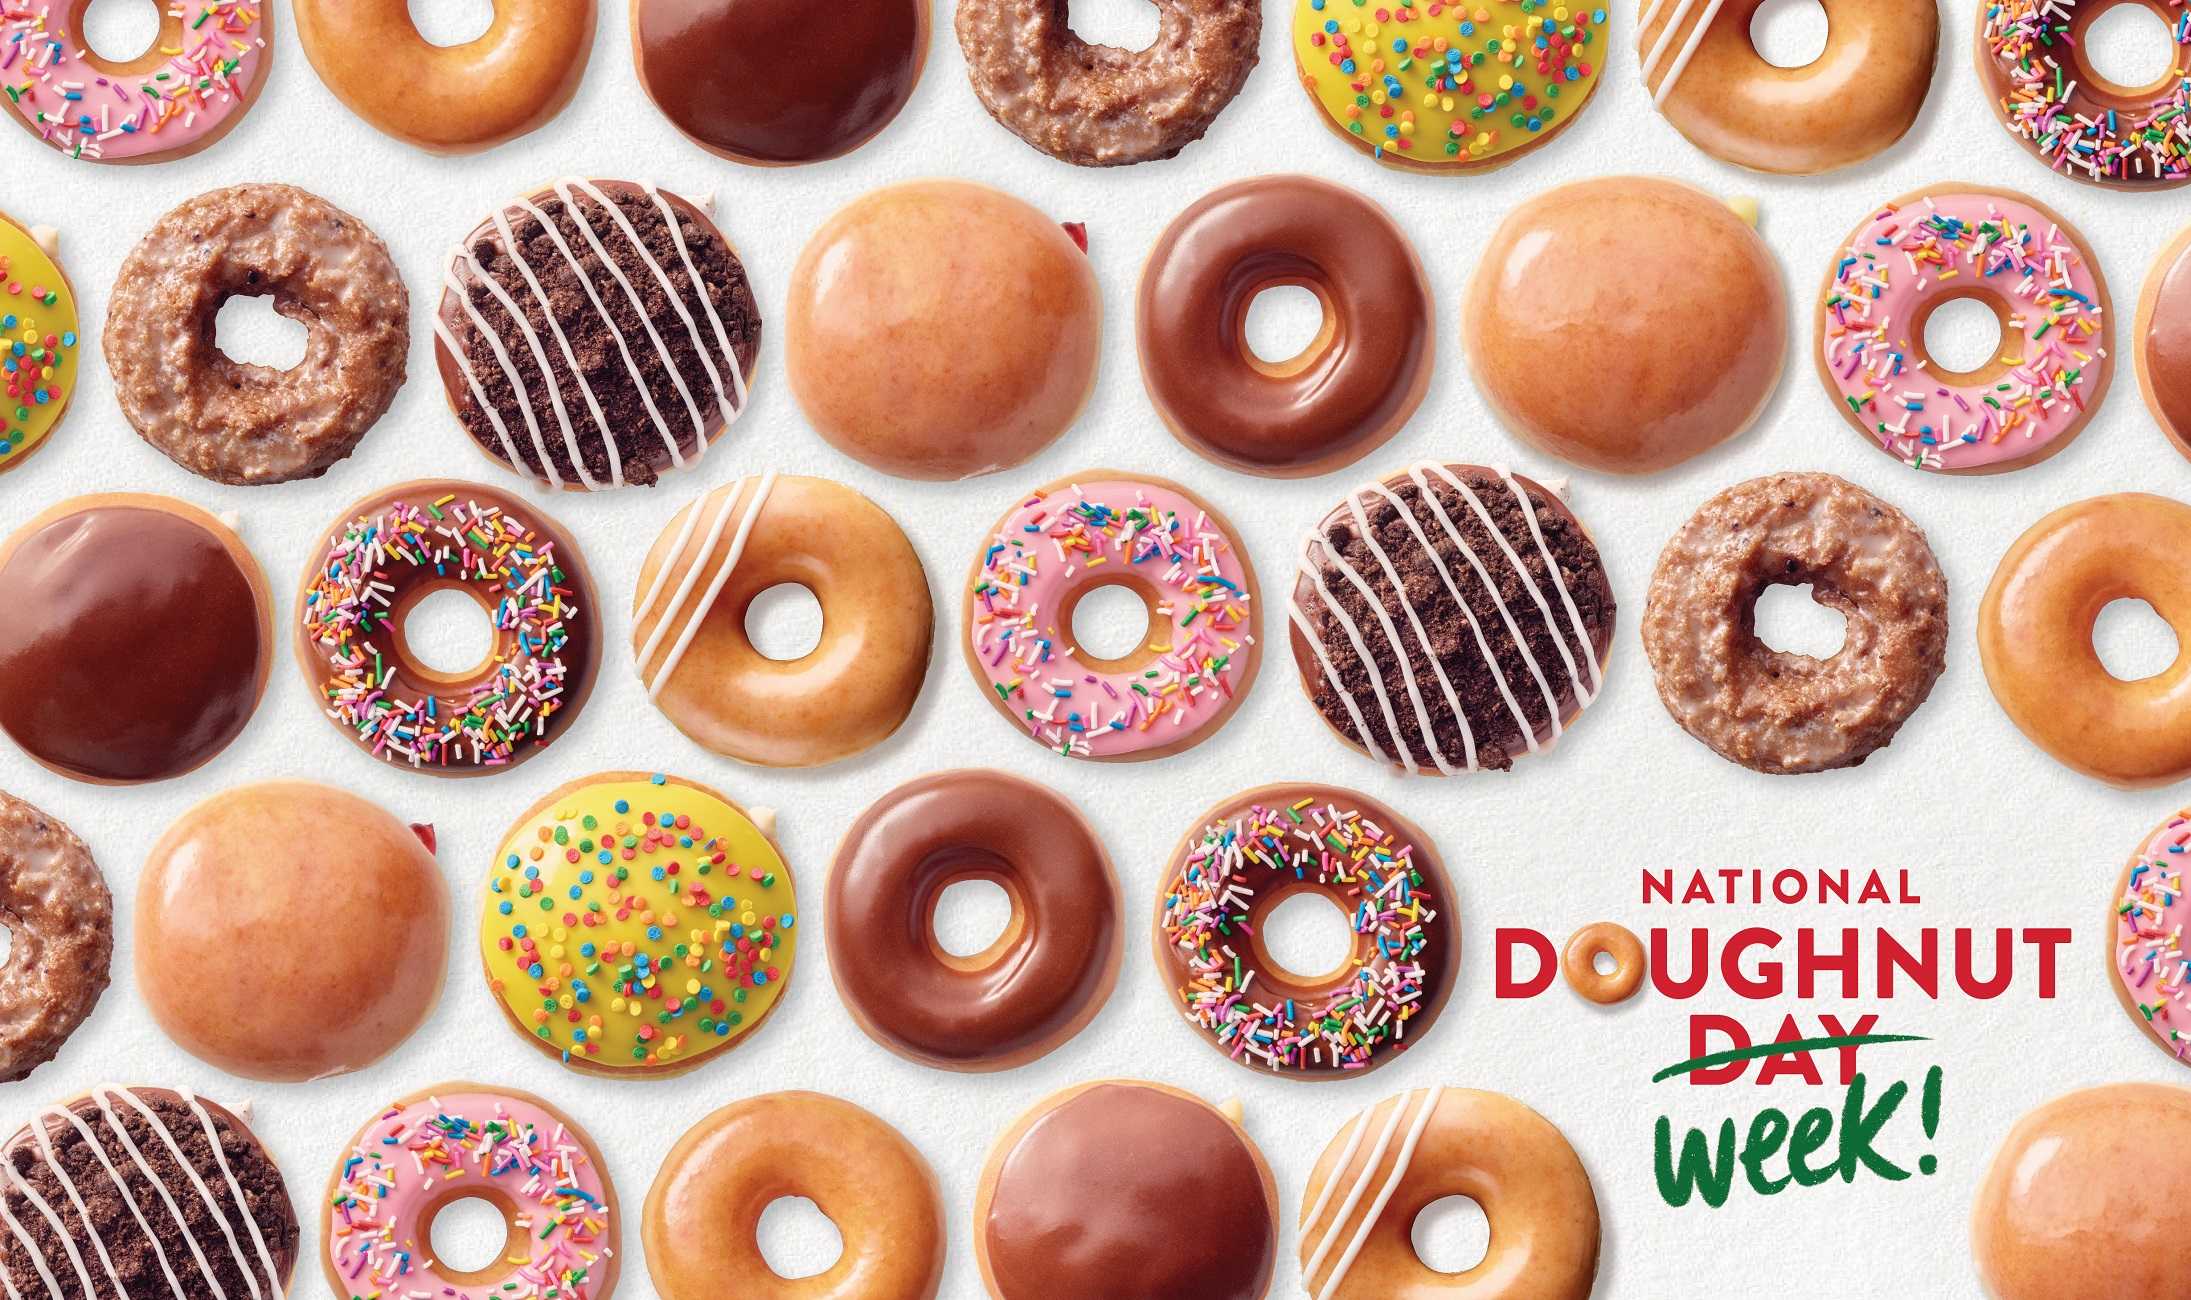 Krispy Kreme announces first-ever National Doughnut Week in June.